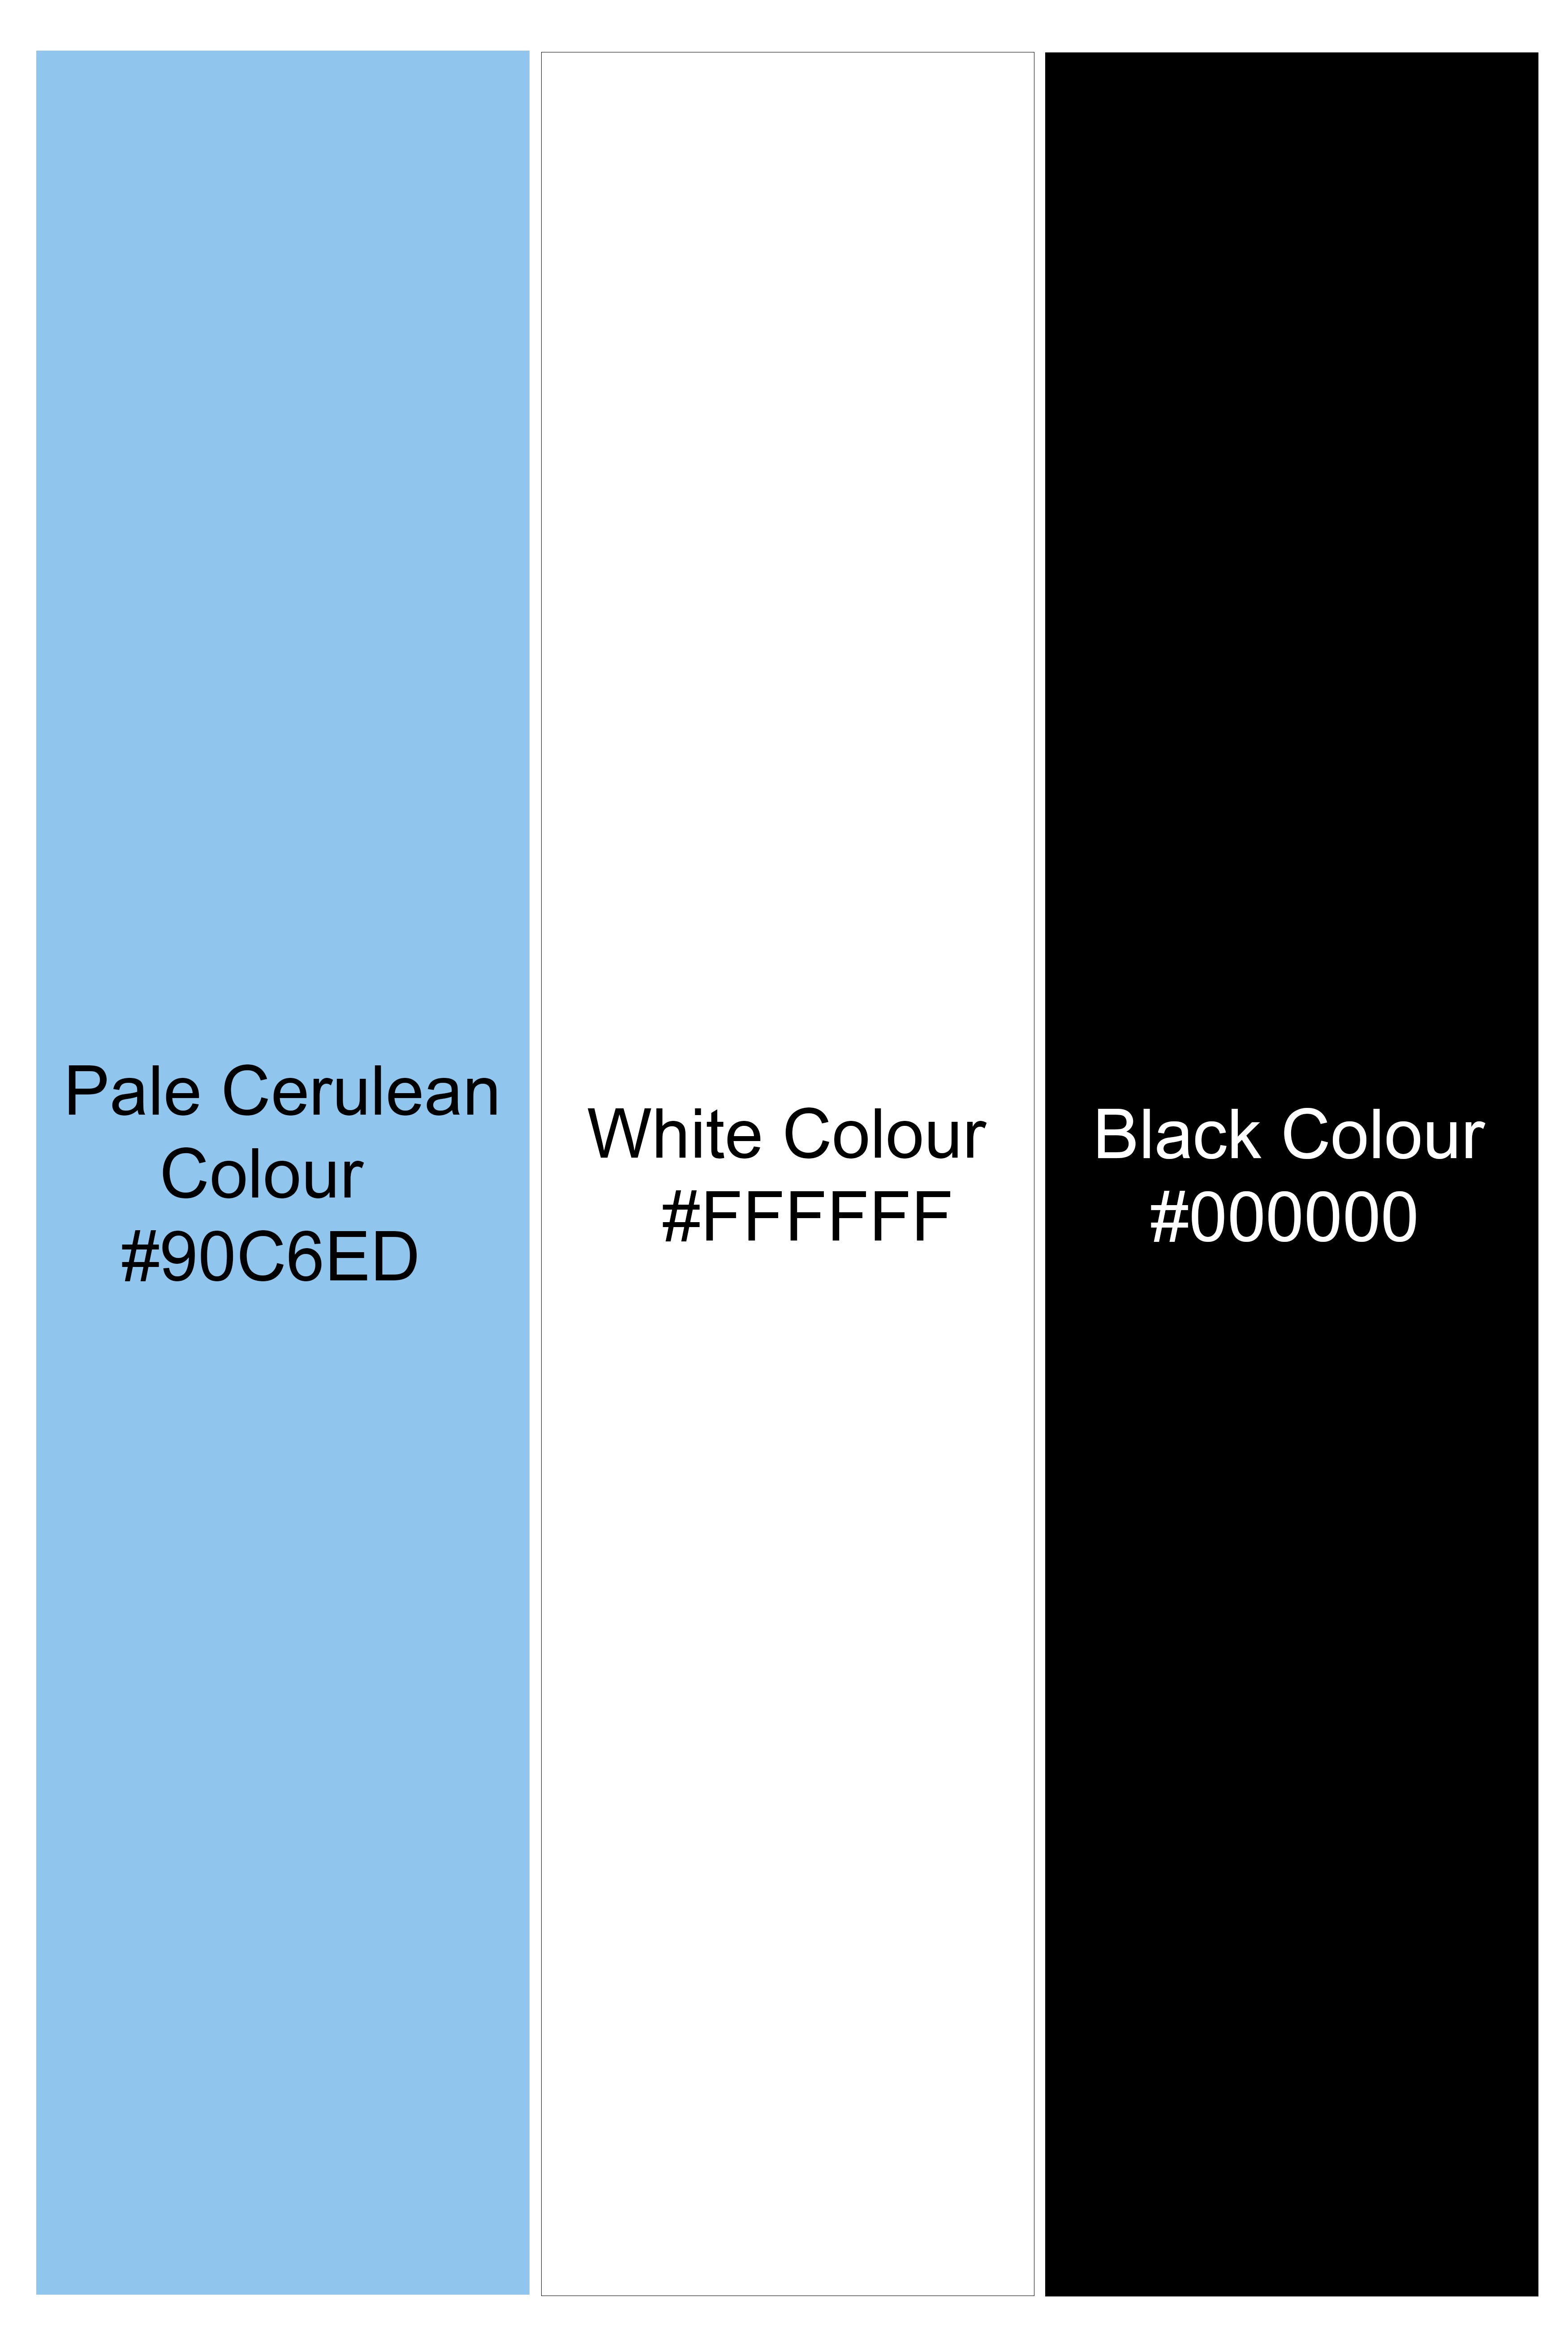 Bright White with Pale Cerulean Blue and Black Block Pattern Premium Cotton Pique Polo TS897-S, TS897-M, TS897-L, TS897-XL, TS897-XXL